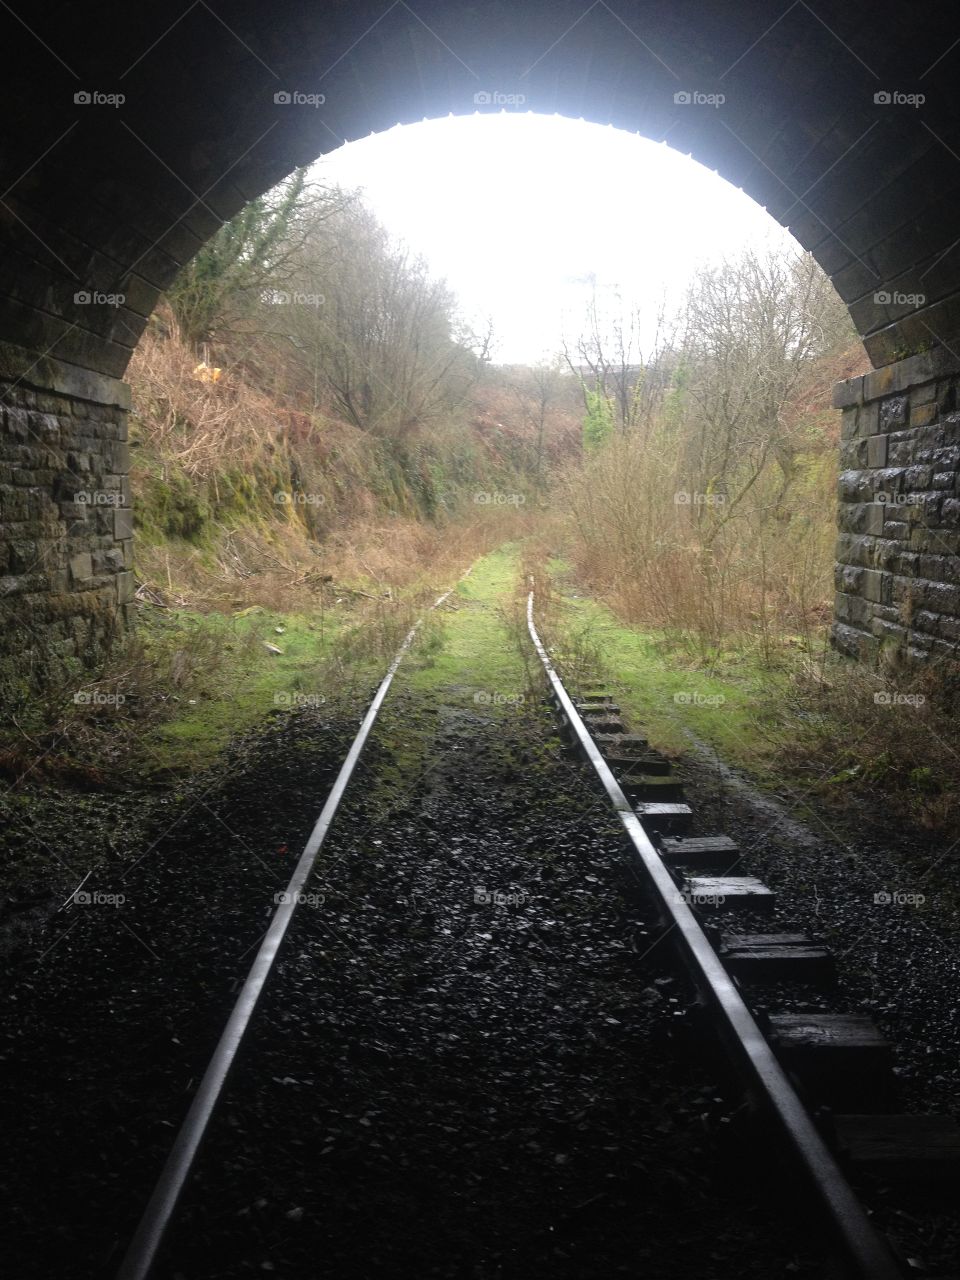 Scotland's abandoned railways